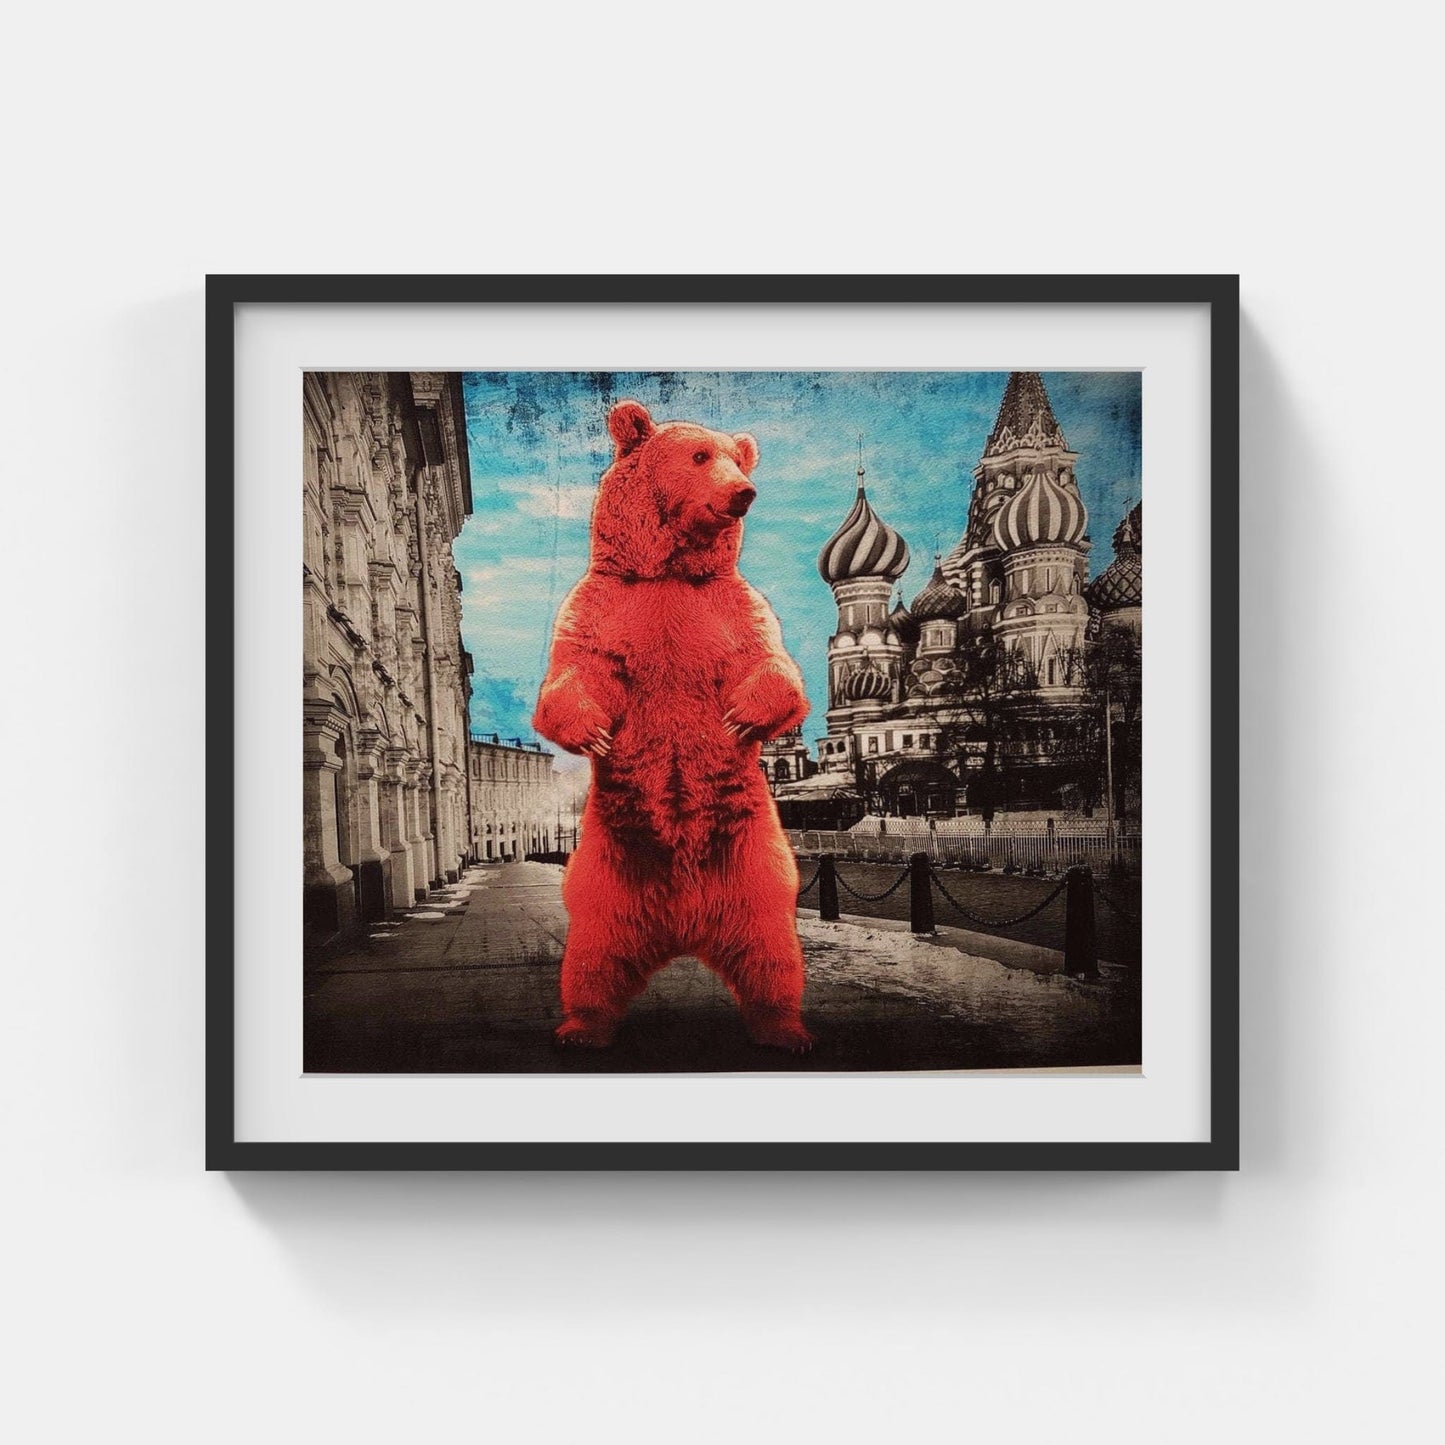 Lars Tunebo -  Red square bear